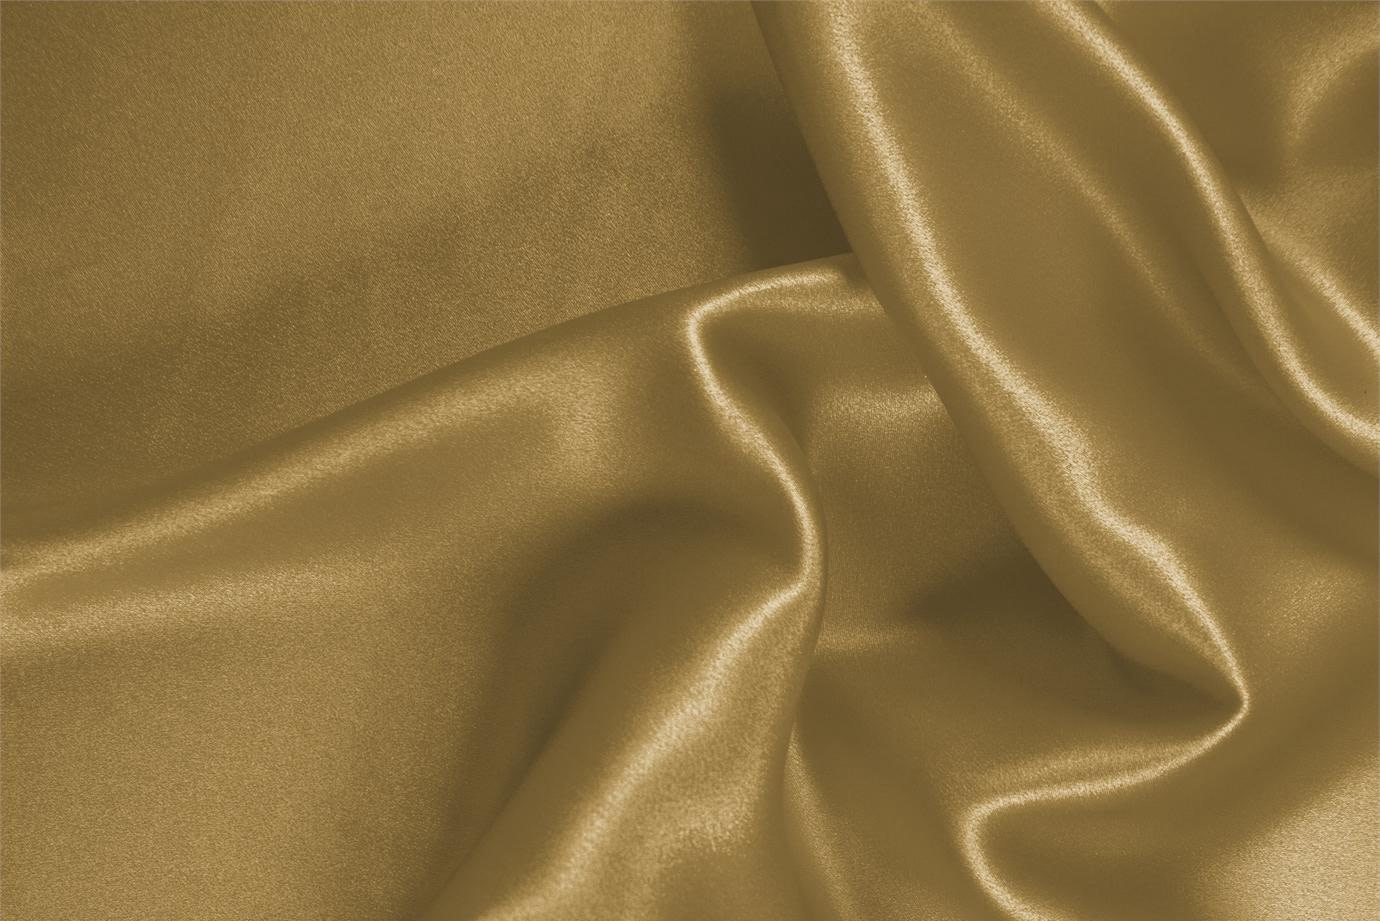 Honey Brown Silk Crêpe Satin fabric for dressmaking